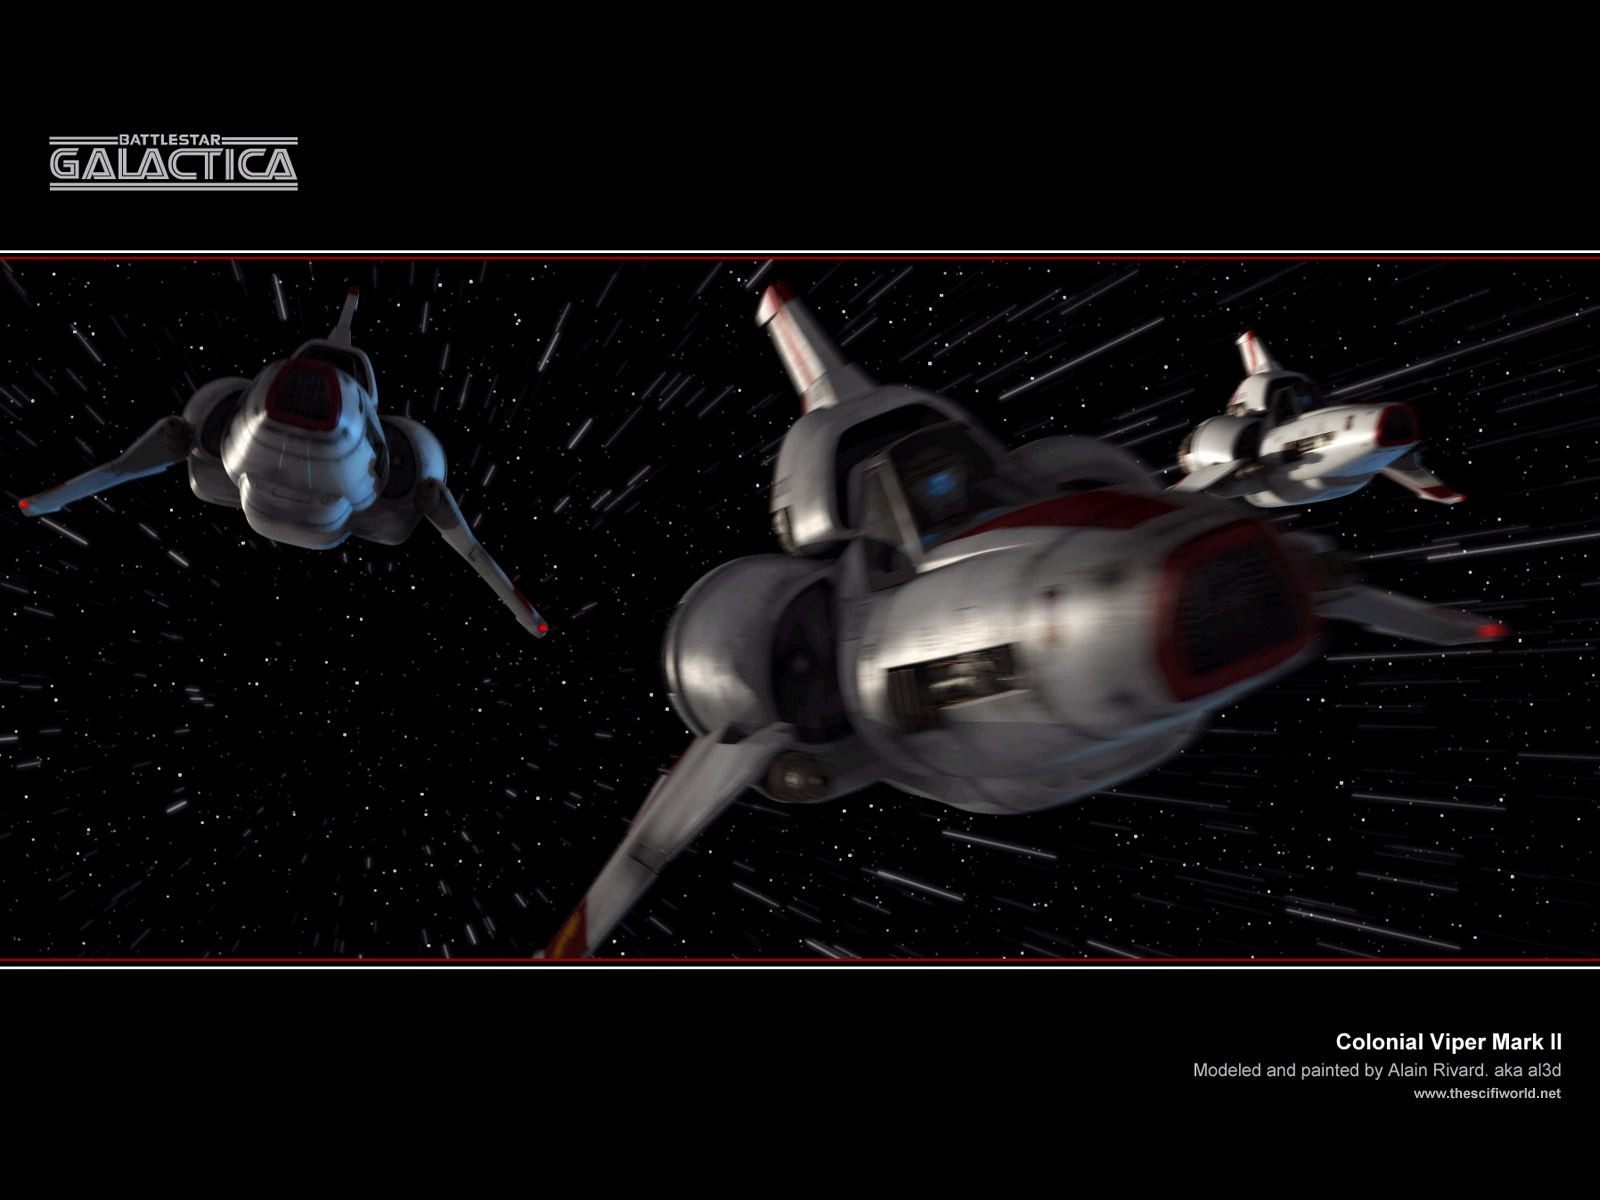 Battlestar Galactica Spaceships Vehicles HD Wallpaper Of Space